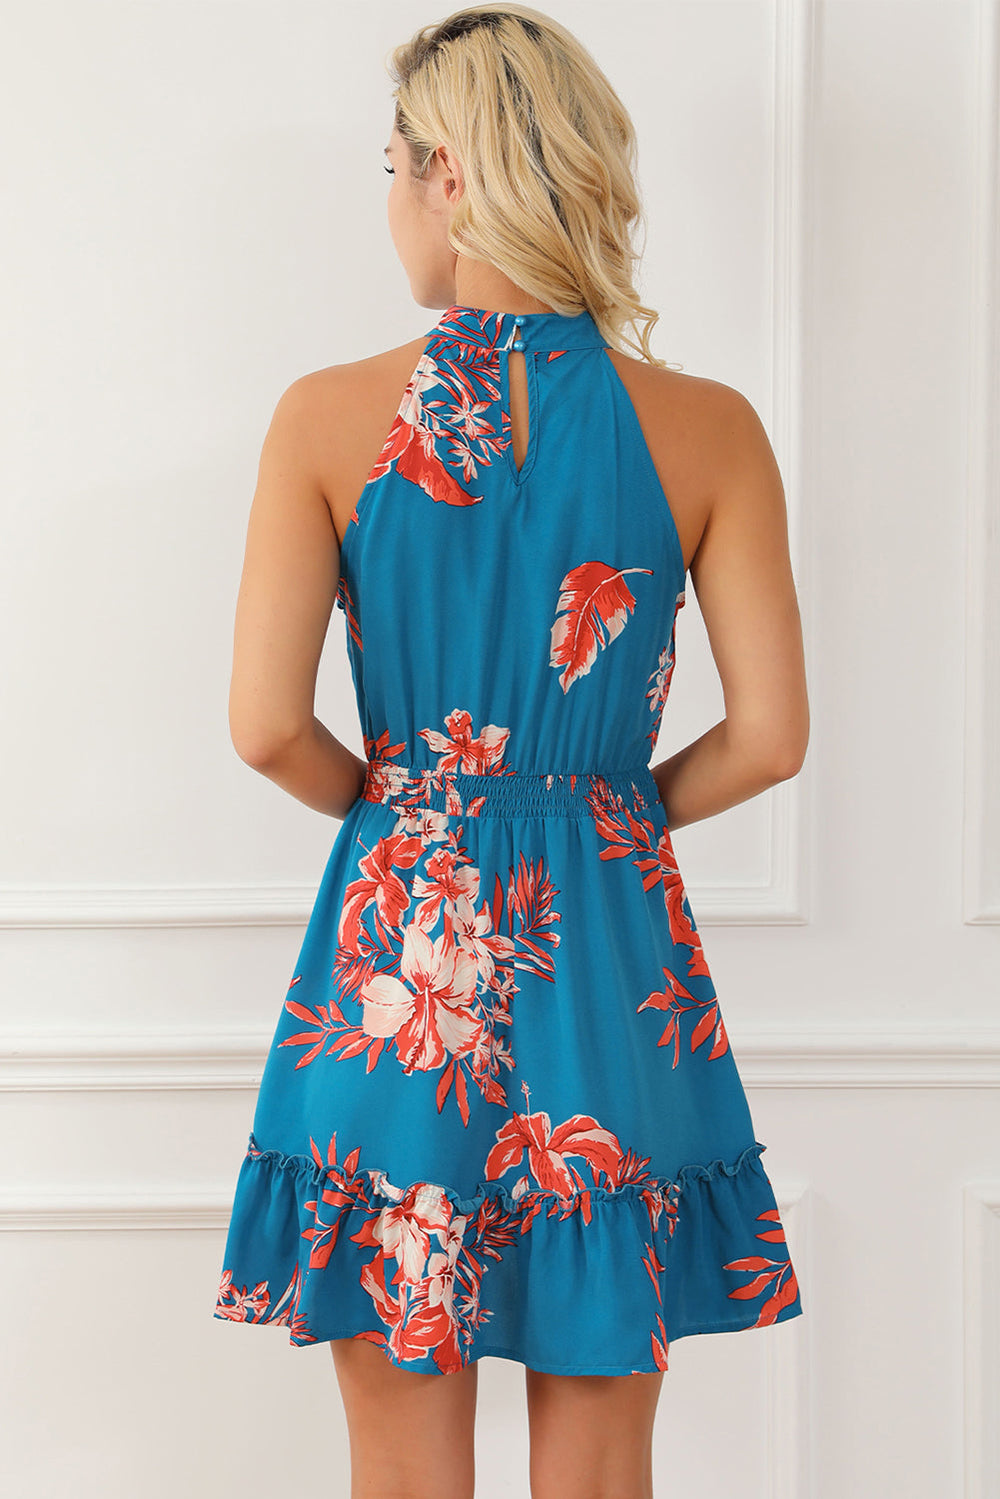 The802Gypsy  Dresses Sky Blue Floral Print Sleeveless Ruffled Mini Dress